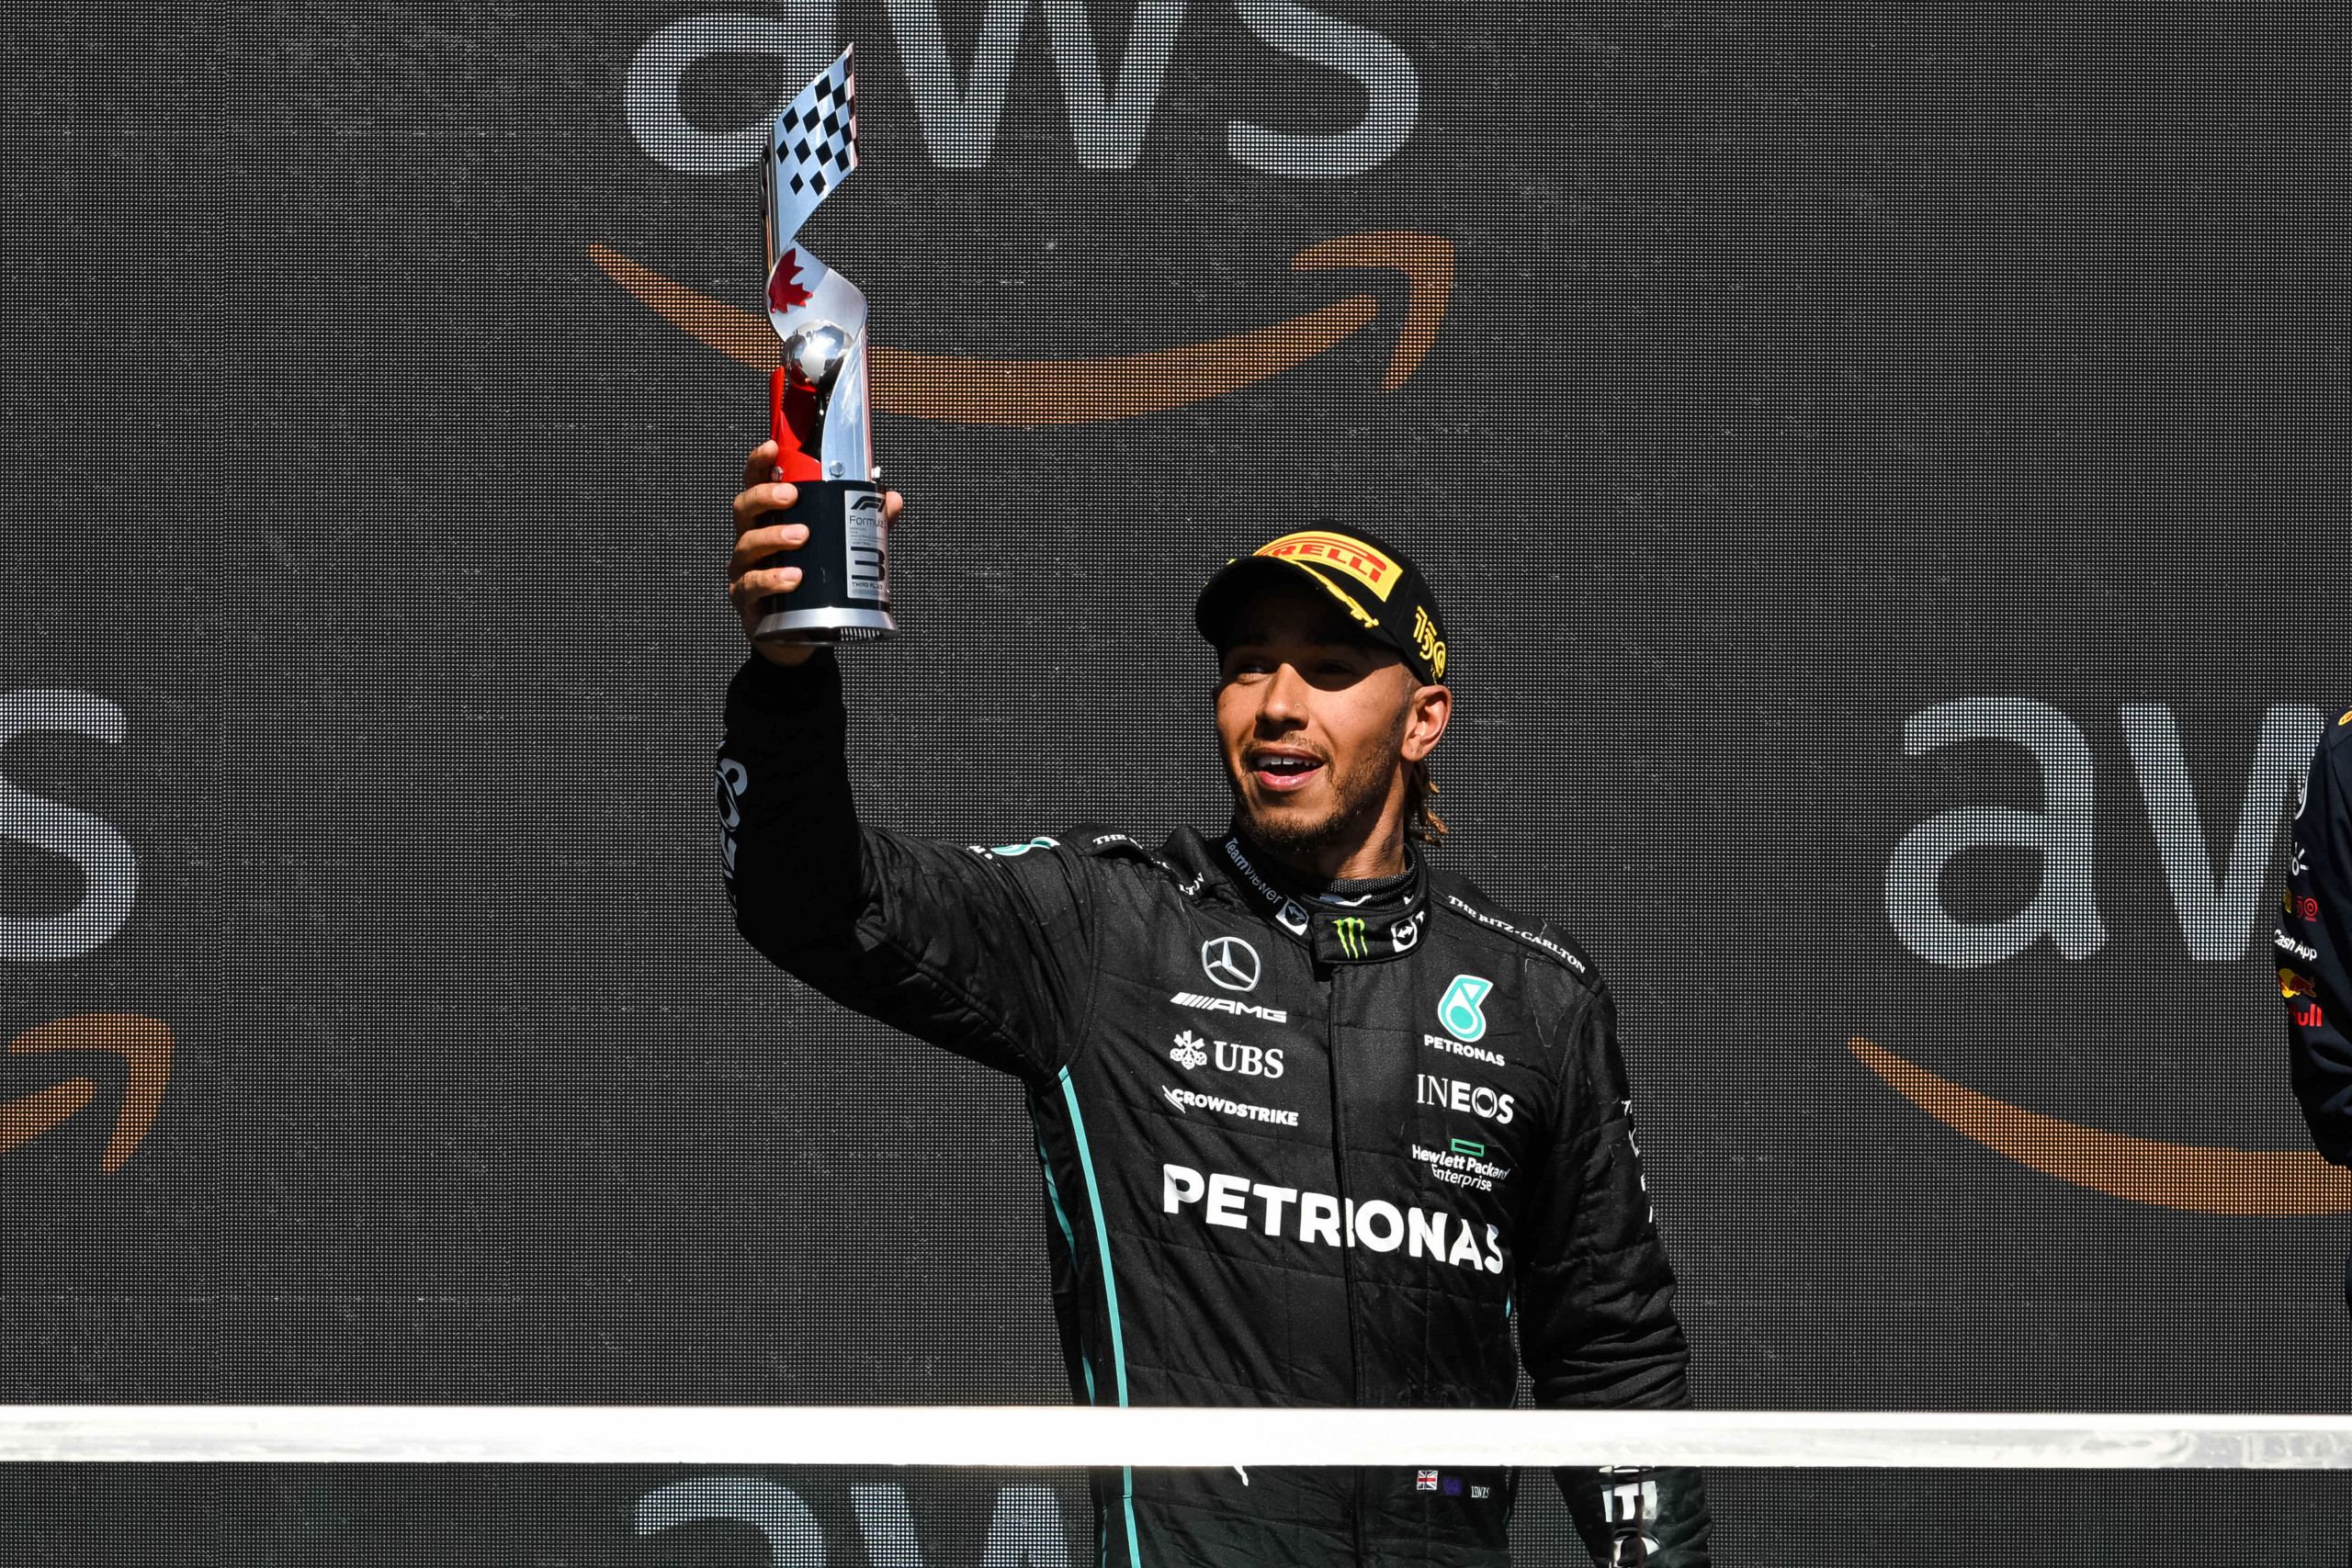 F1 Star Lewis Hamilton Joins Denver Broncos Ownership Group